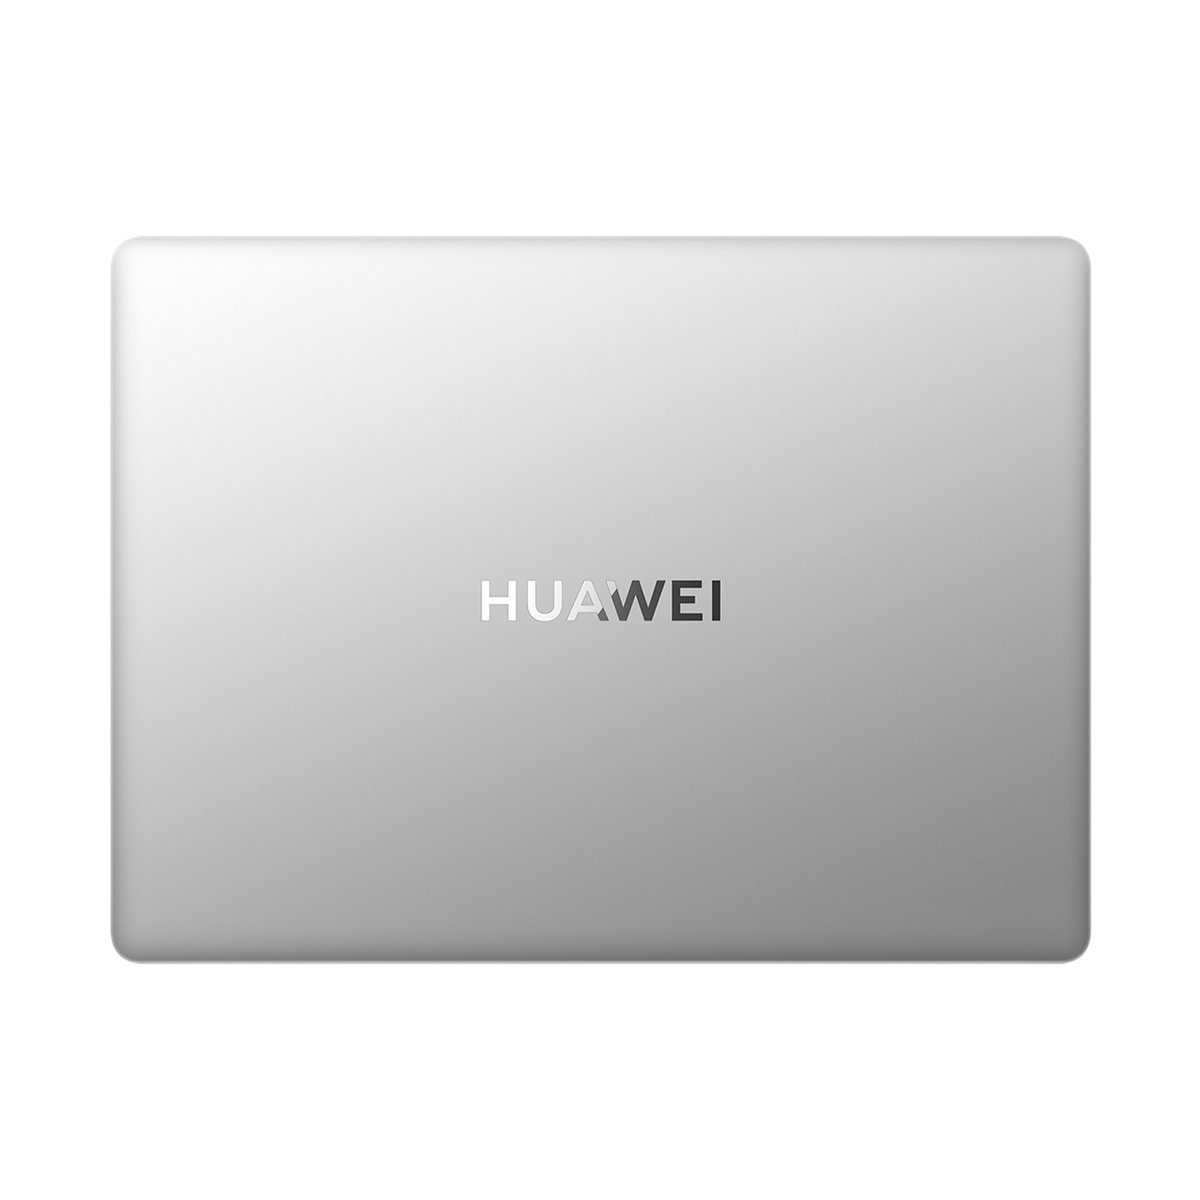 Huawei Matebook 13-DWDH9A Intel Core i5 Processor,8GB RAM,512GB SSD,Integrated Graphics,13.0" FHD,Windows 10,Mystic Silver